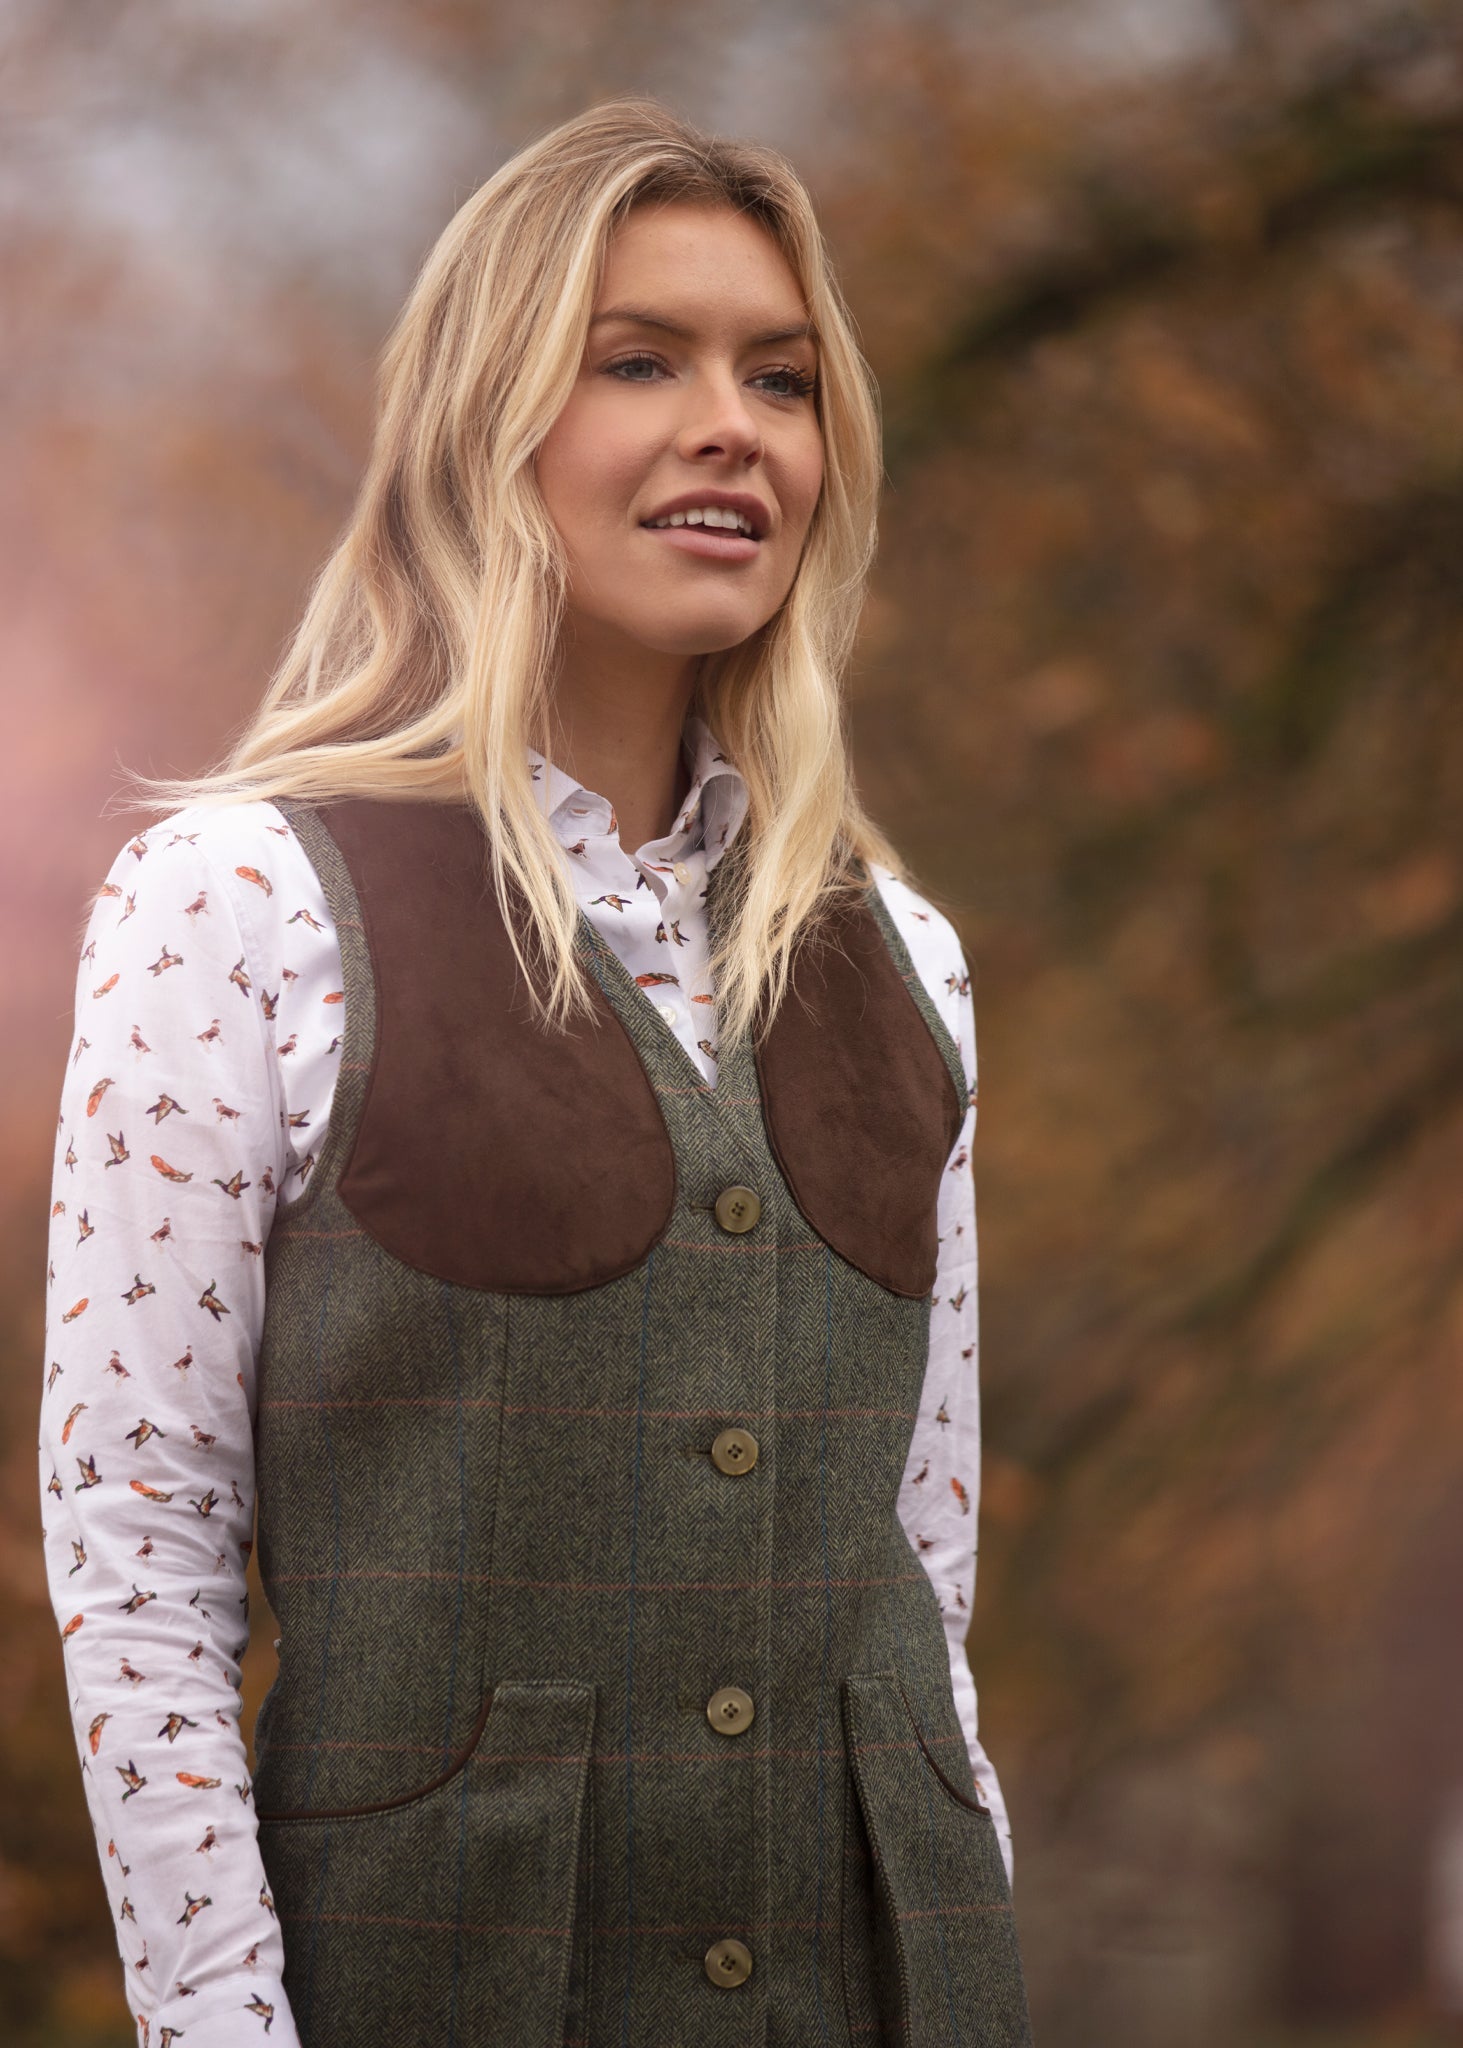 combrook-ladies-tweed-shooting-waistcoat-spruce